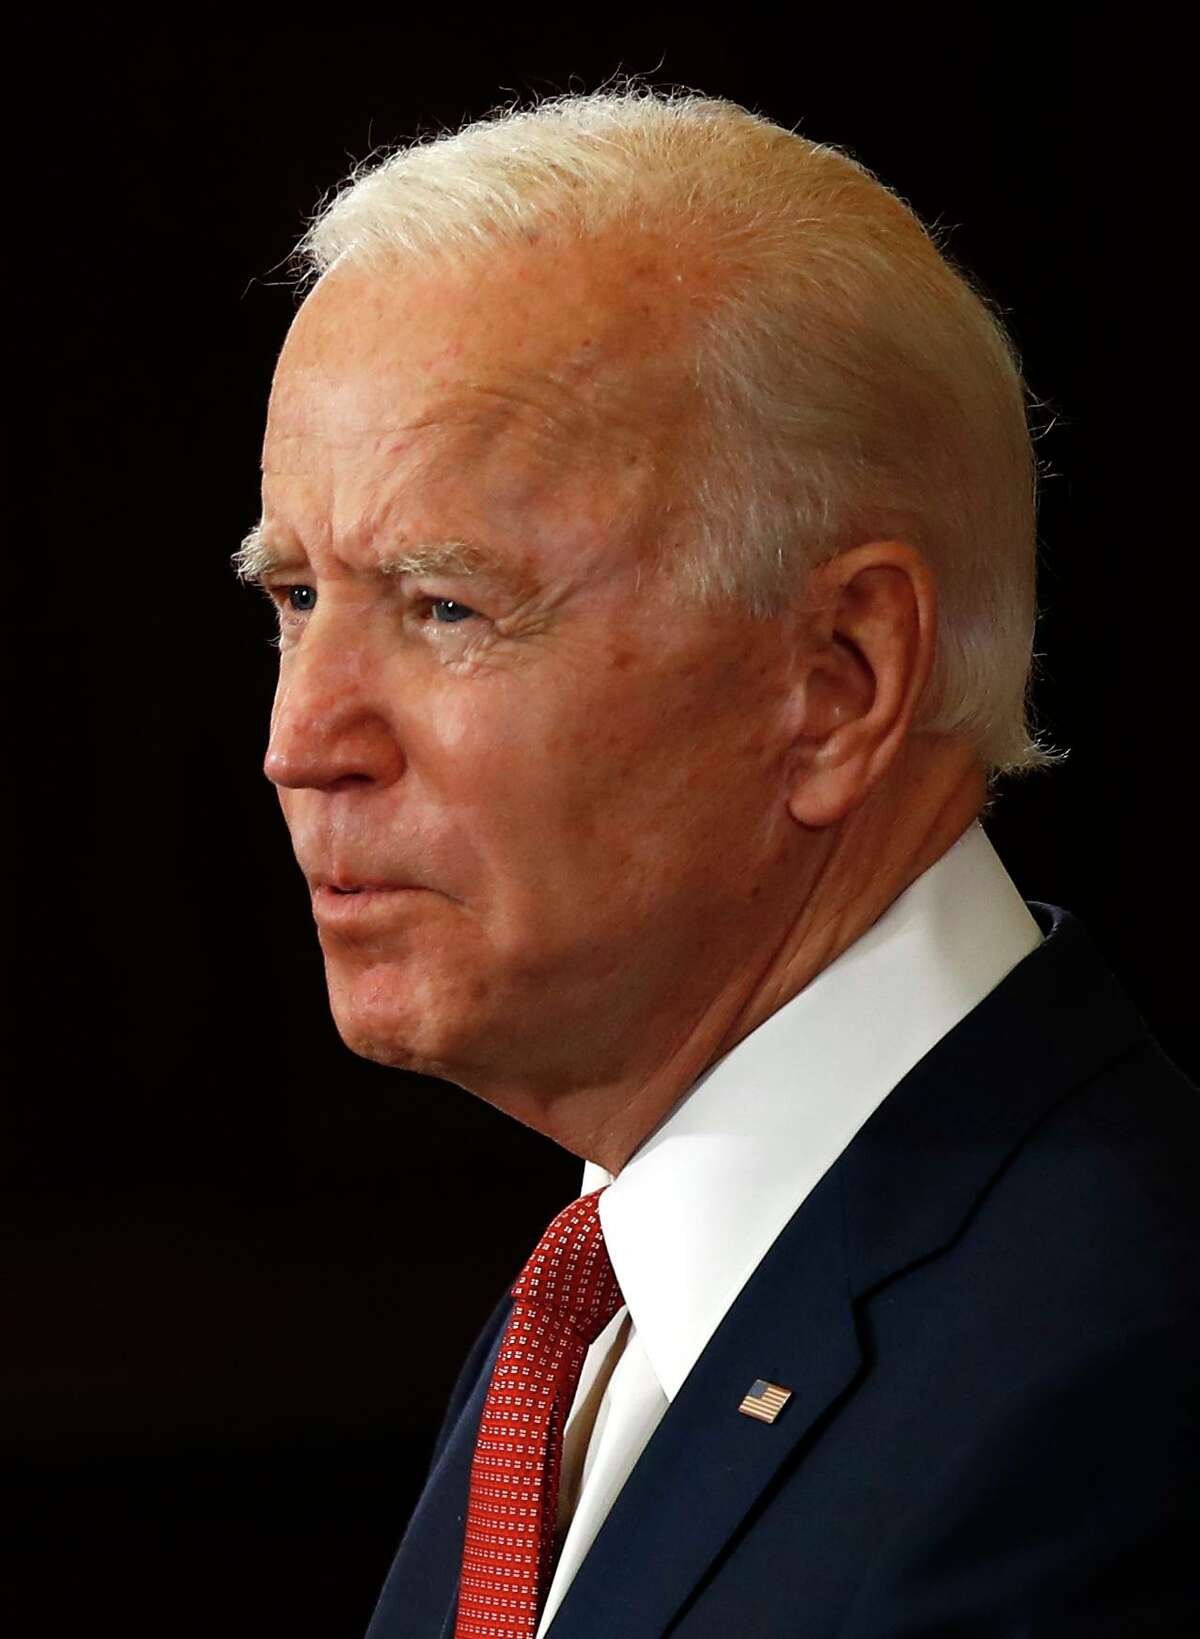 Democratic presidential candidate, former Vice President Joe Biden speaks in Philadelphia, Tuesday, June 2, 2020. (AP Photo/Matt Rourke)